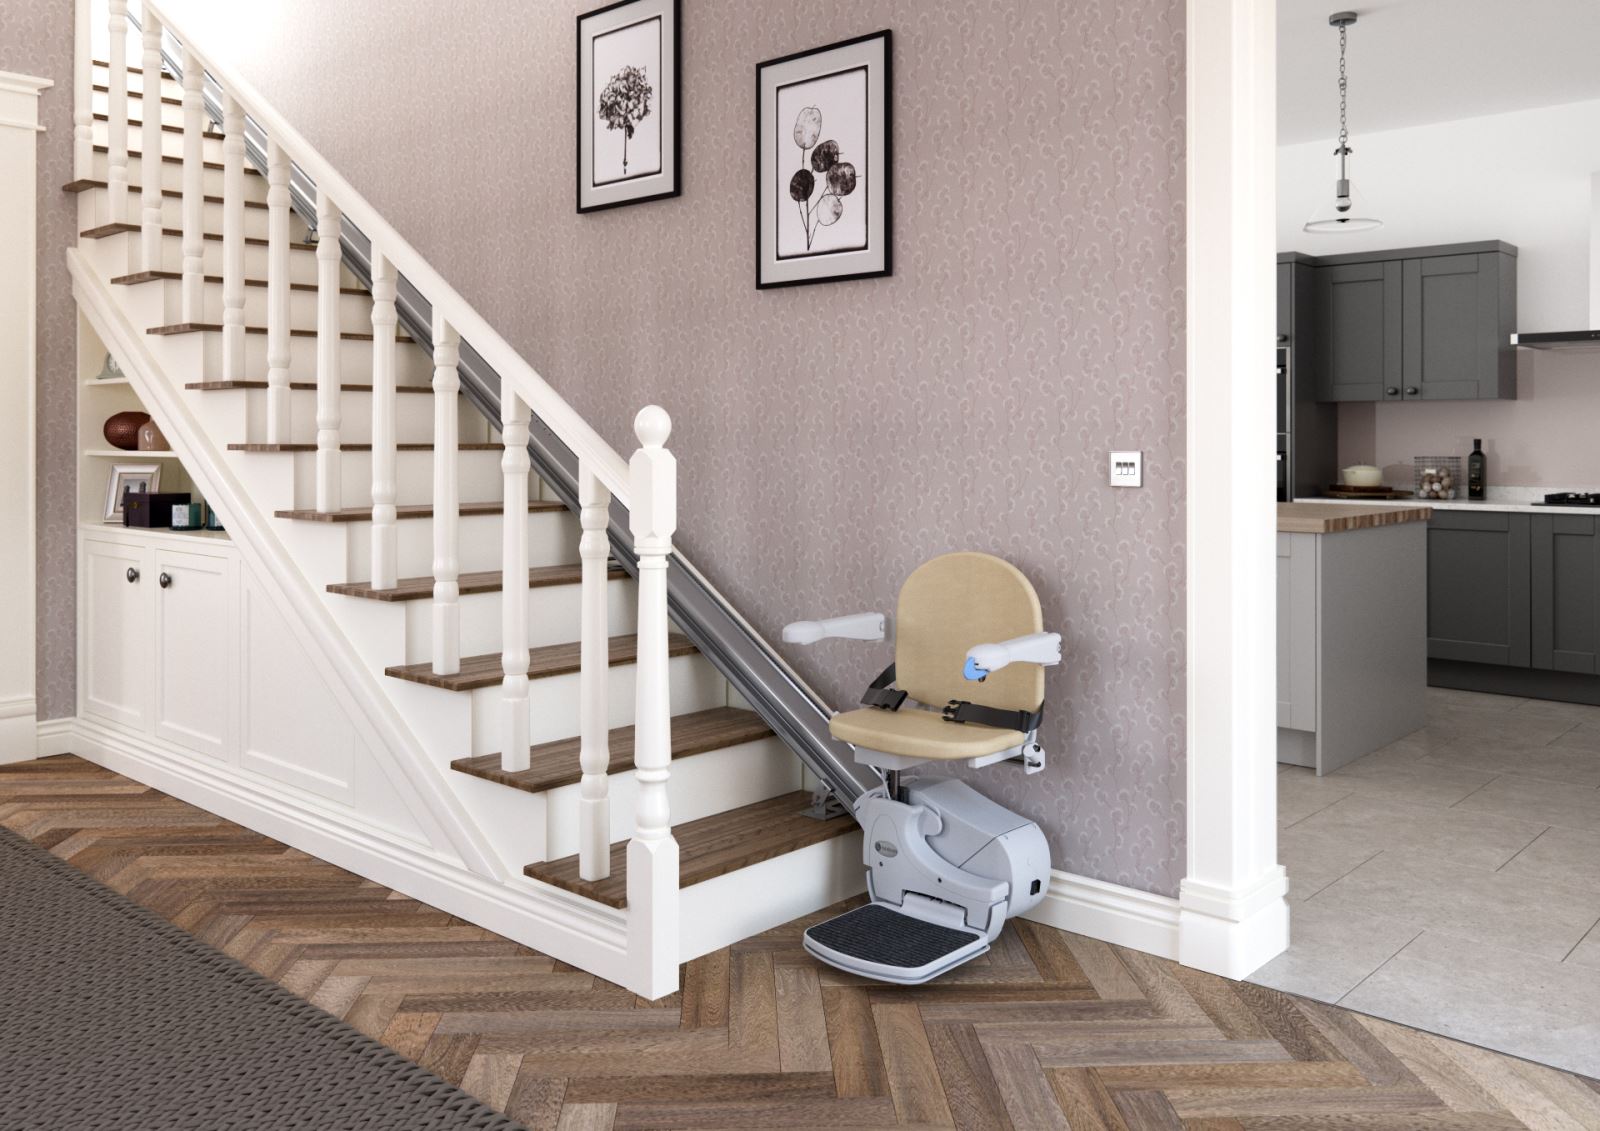 Staircase Design Ideas For Your Home Interior Design